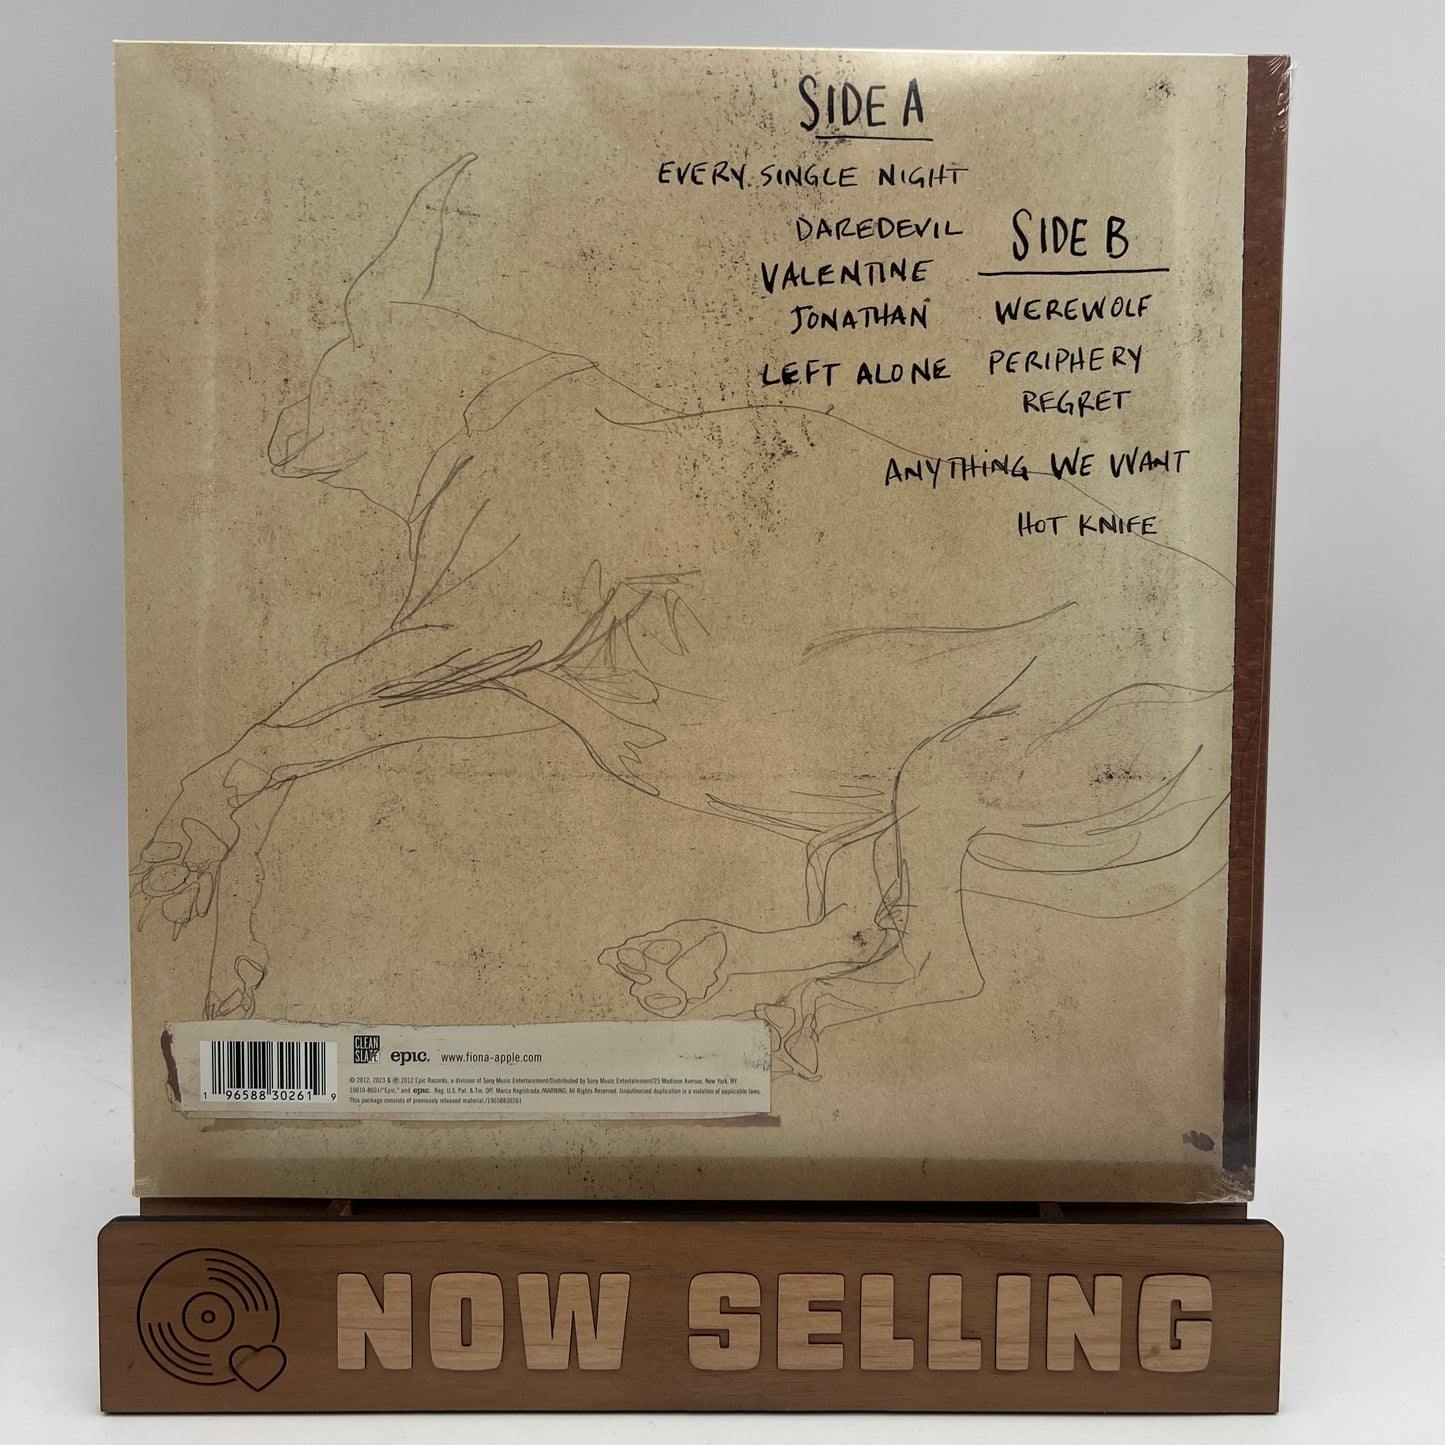 Fiona Apple - The Idler Wheel Is Wiser Vinyl LP Reissue SEALED